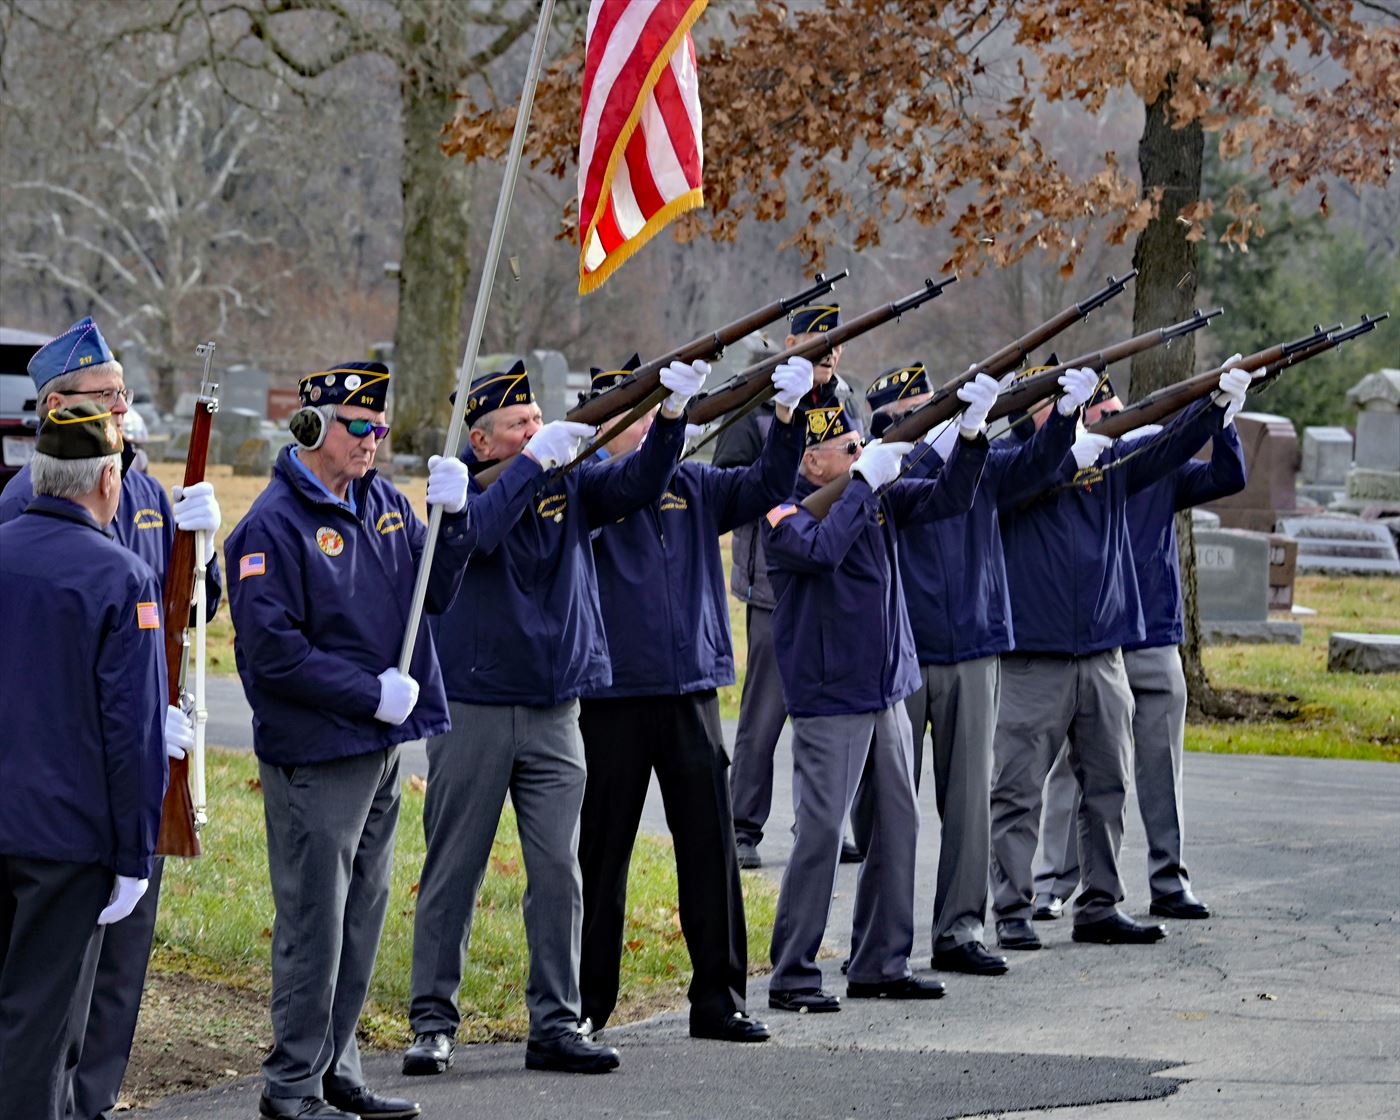 The Sidney Veterans Honor Guard